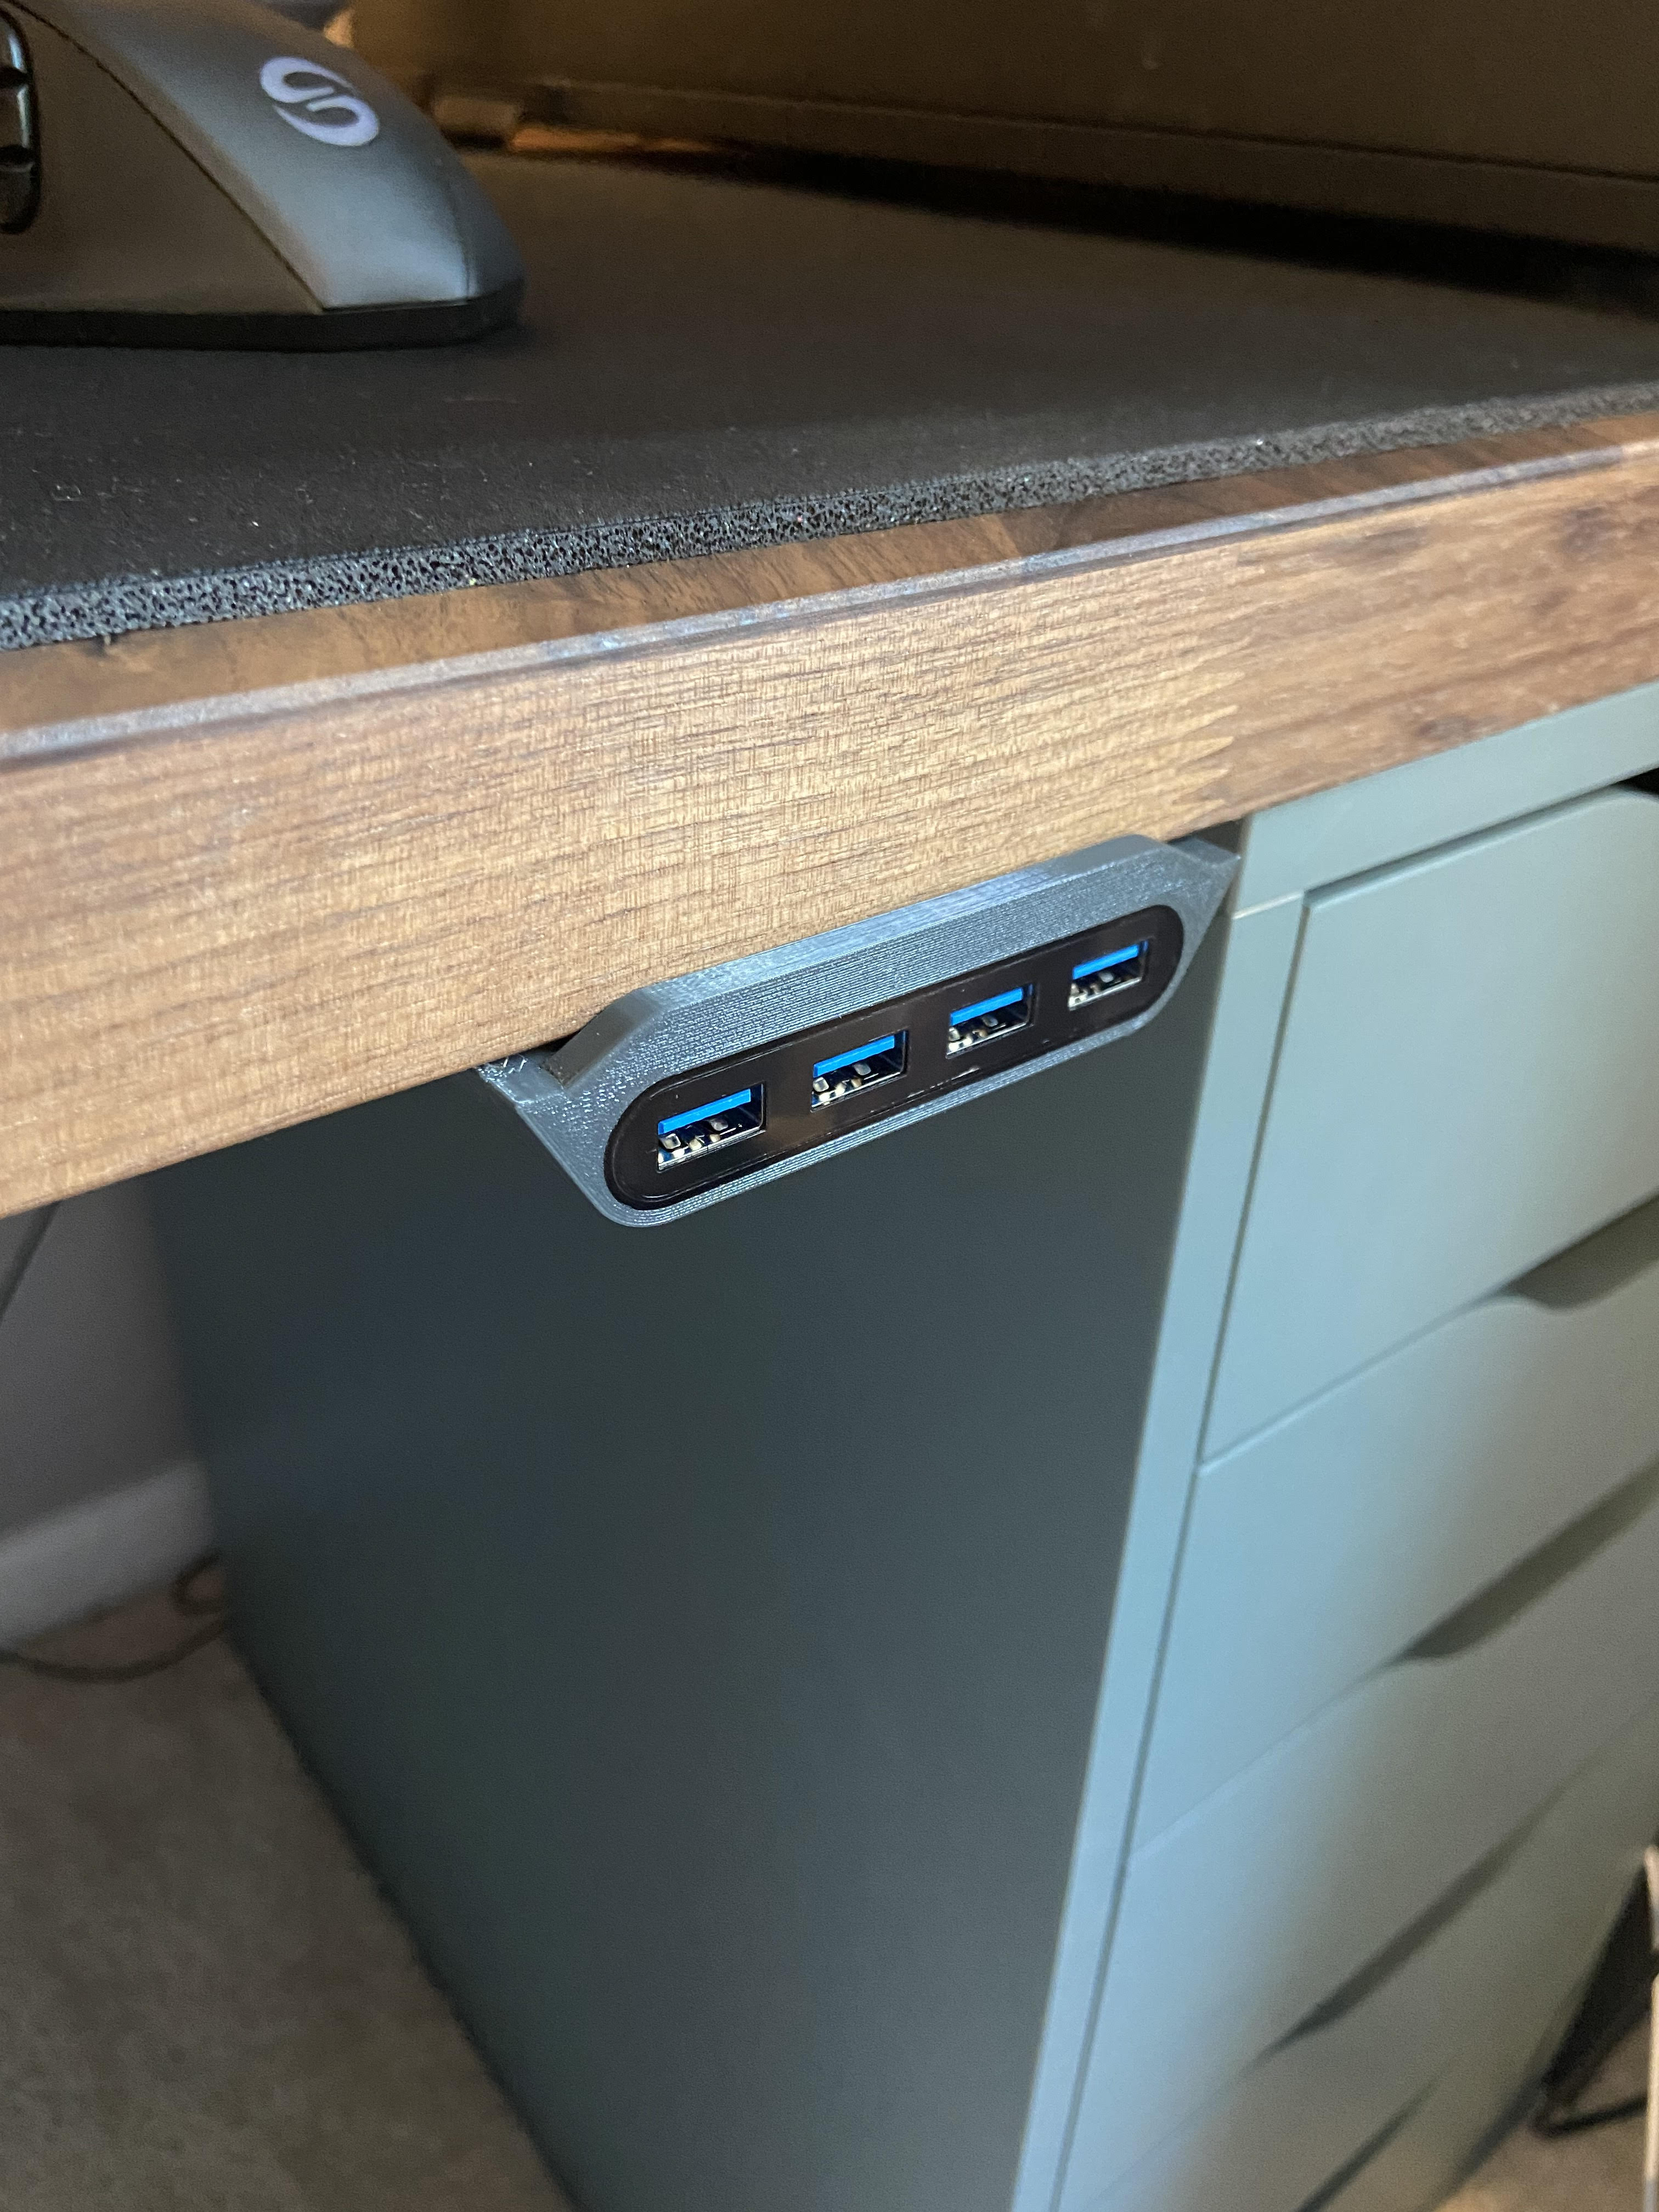 StarTech USB Hub Under Desk Mount